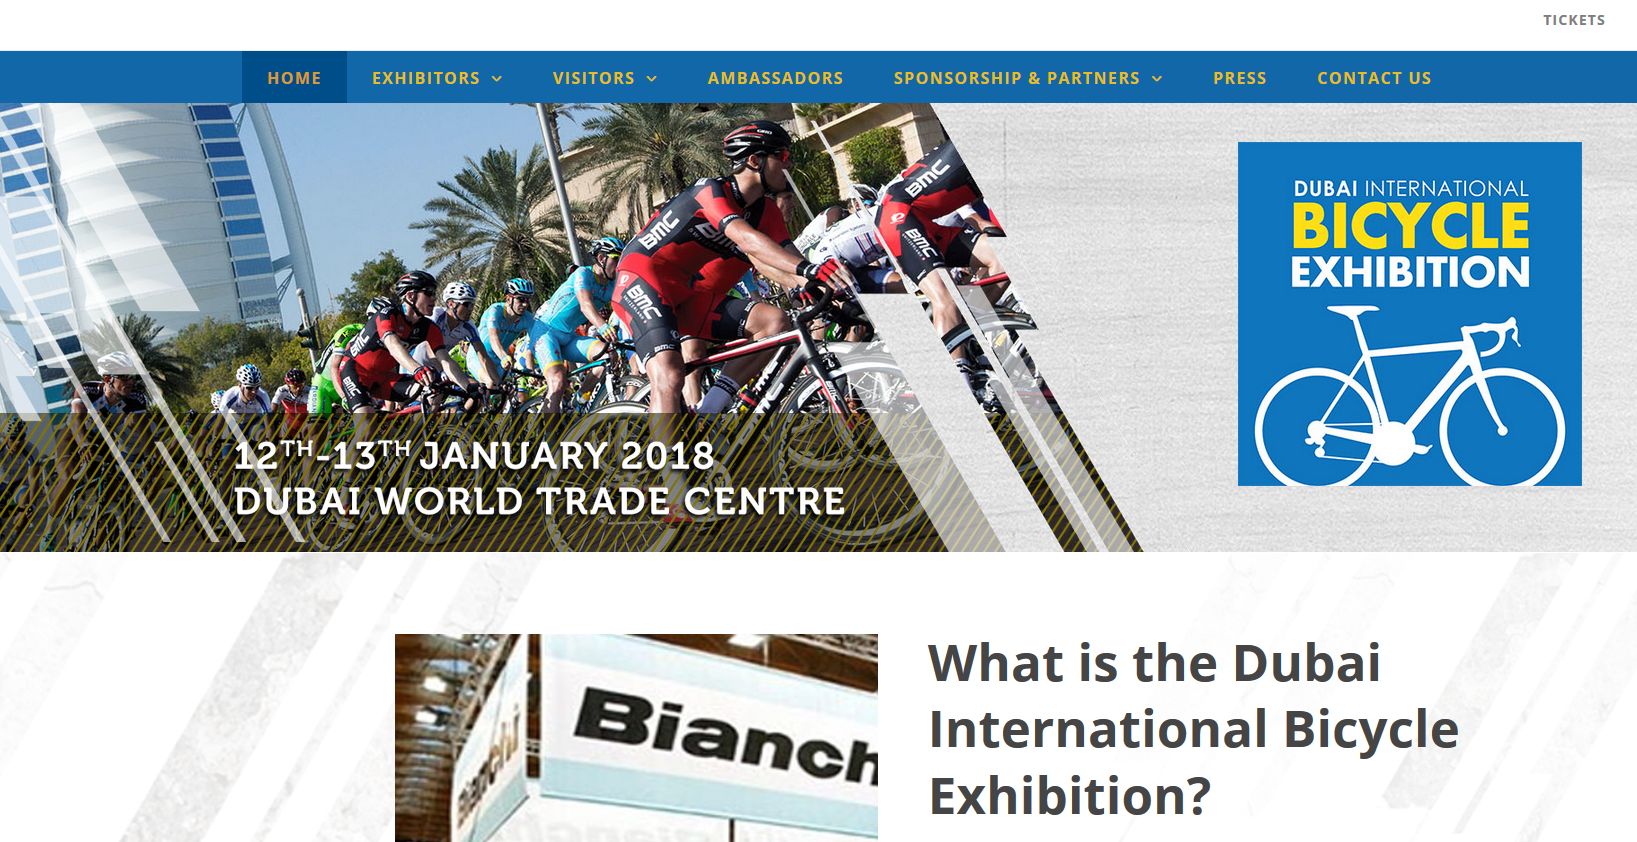 Dubai International Bicycle Exhibition